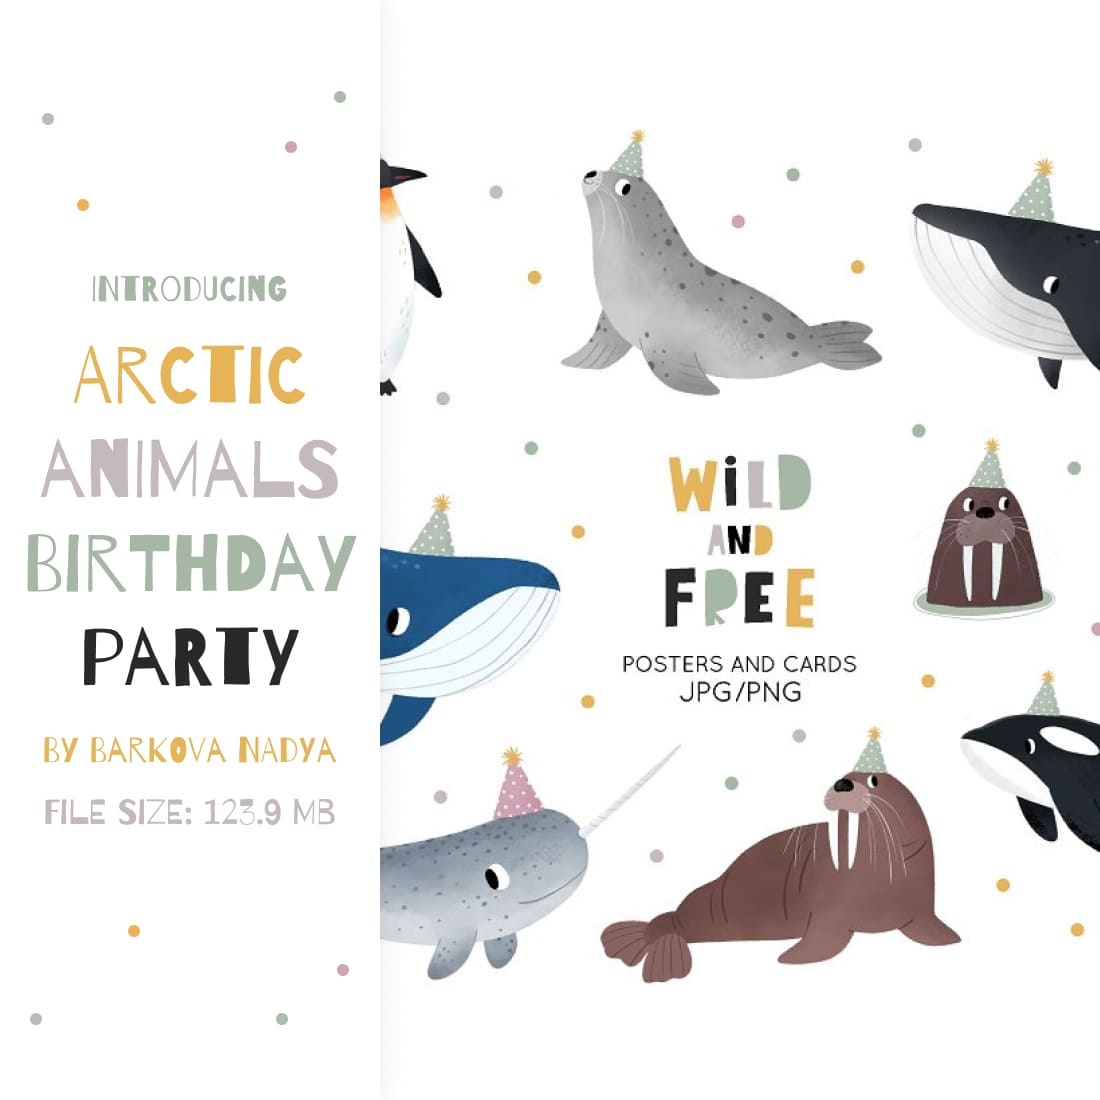 Arctic animals Birthday party main cover.